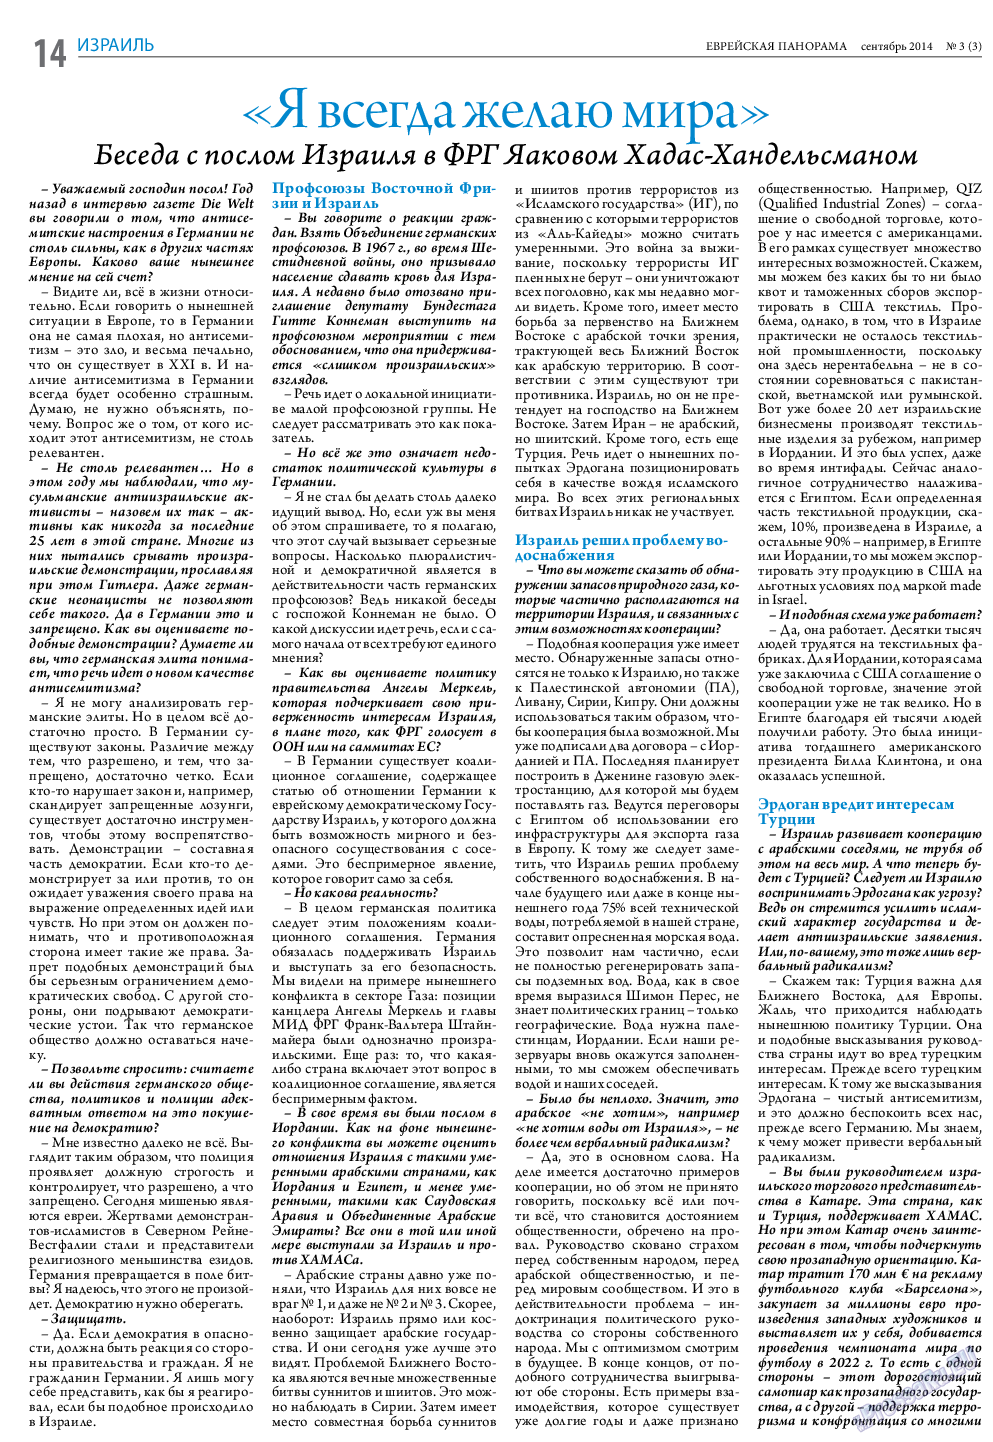 Еврейская панорама, газета. 2014 №3 стр.14